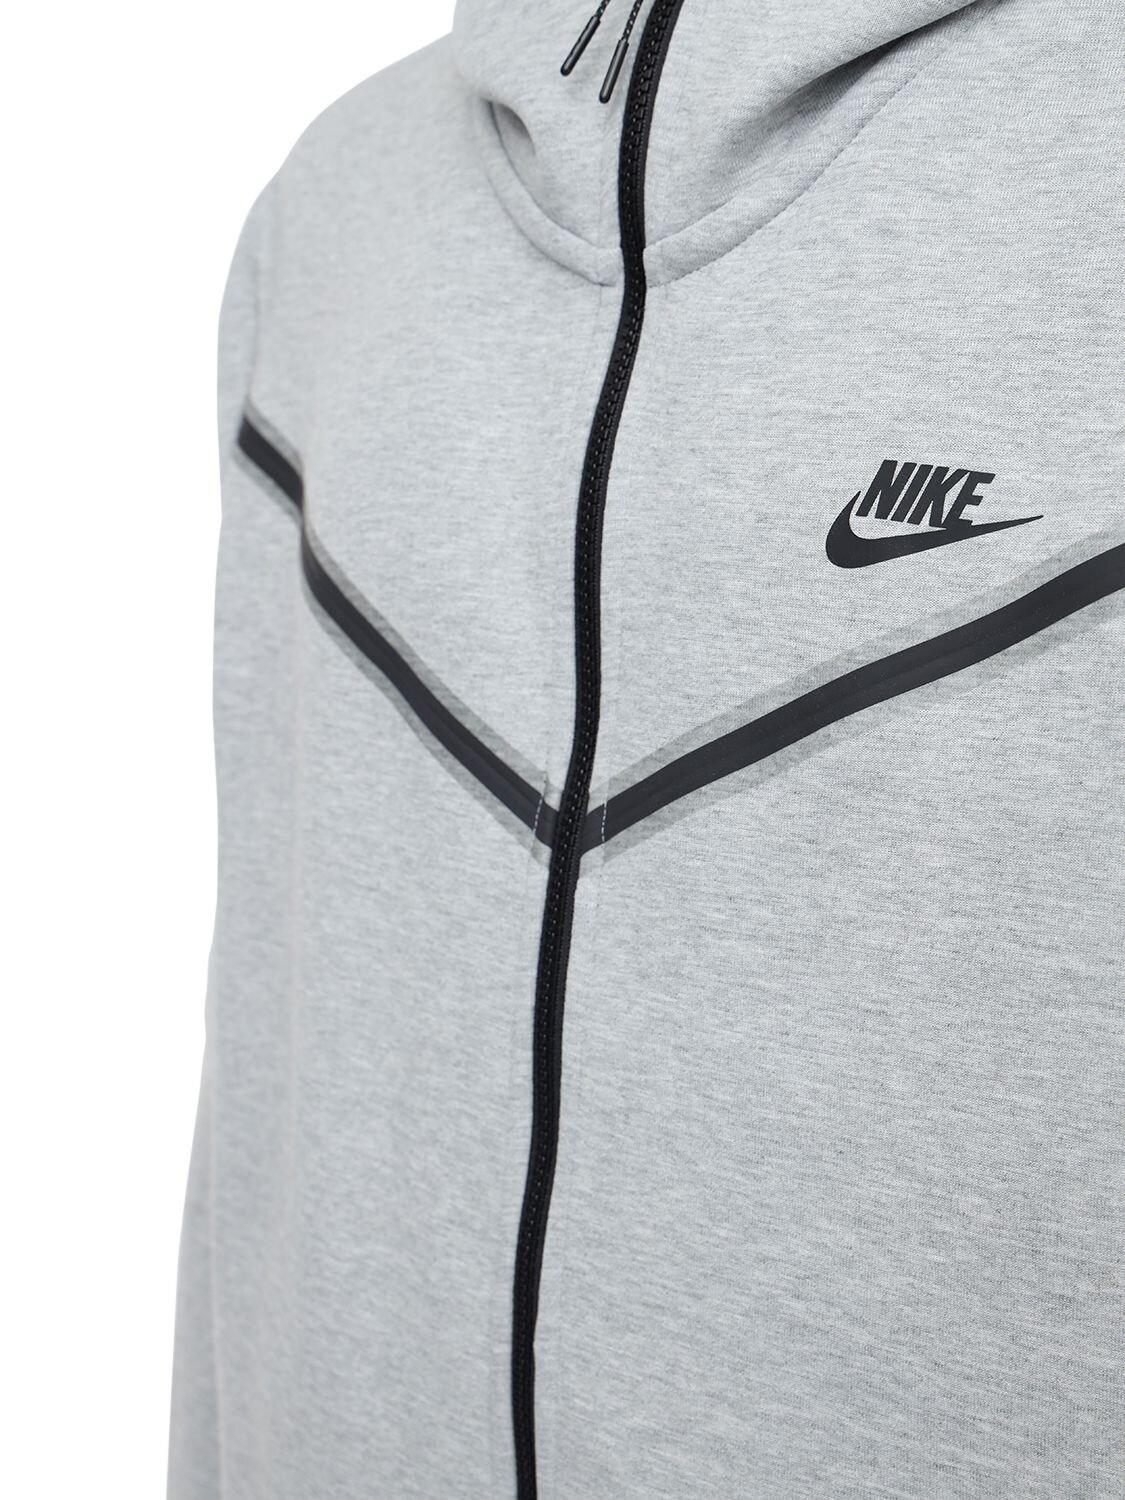 Nike Tech Fleece Full Zip Hoodie in Grey (Gray) for Men - Save 47% - Lyst